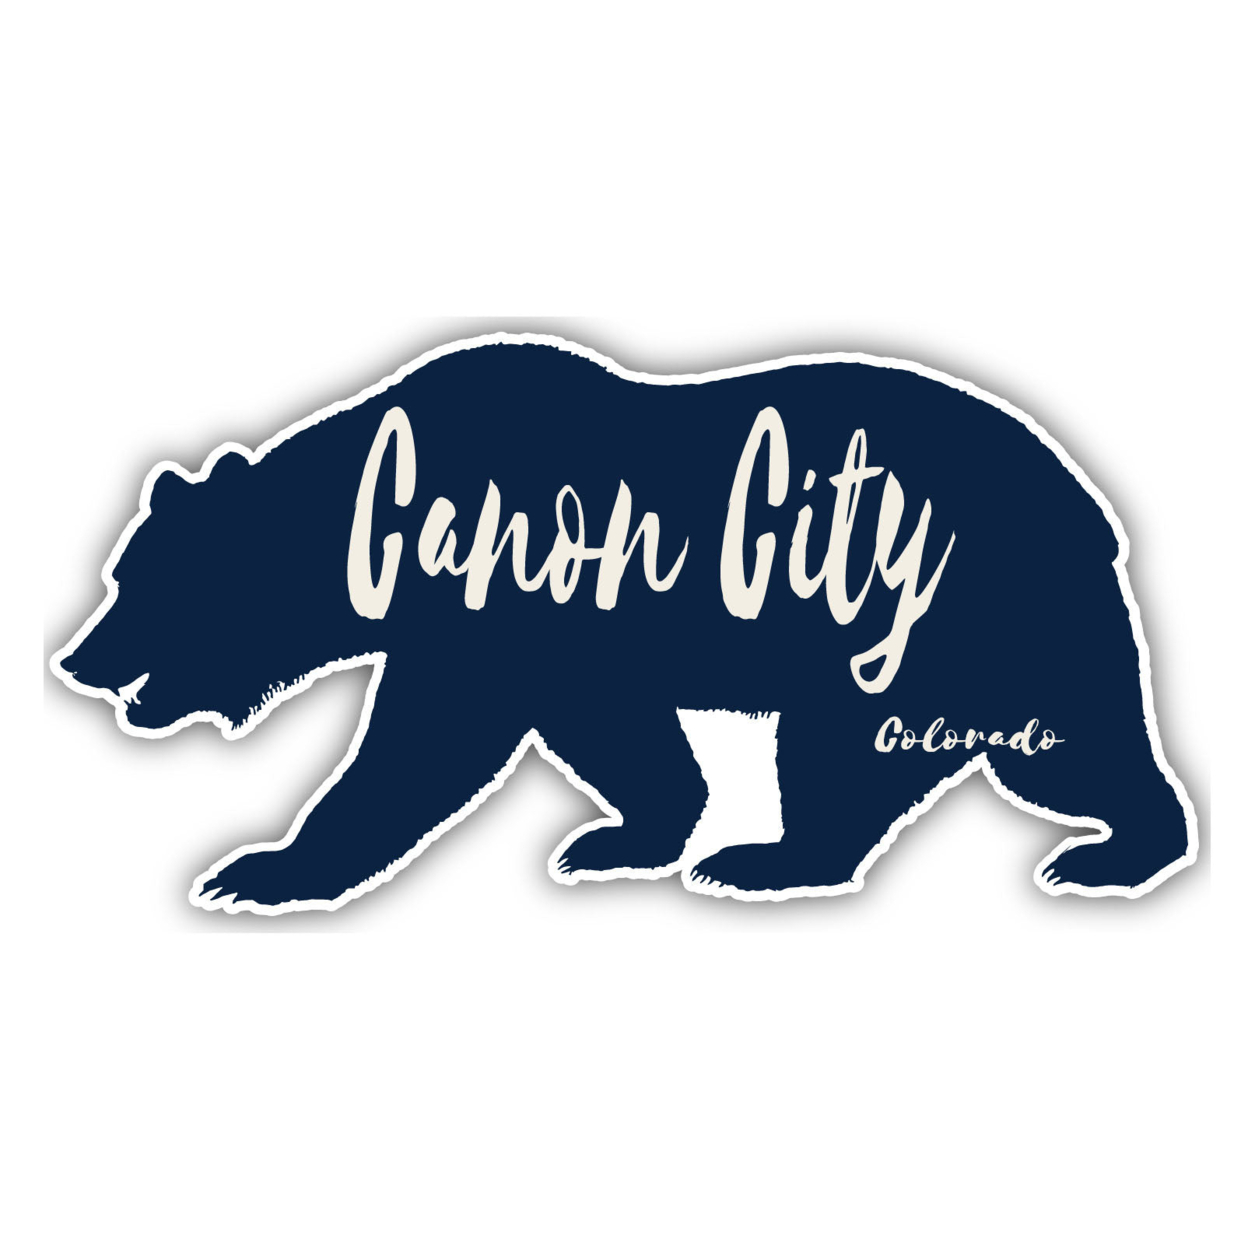 Canon City Colorado Souvenir Decorative Stickers (Choose Theme And Size) - Single Unit, 8-Inch, Camp Life